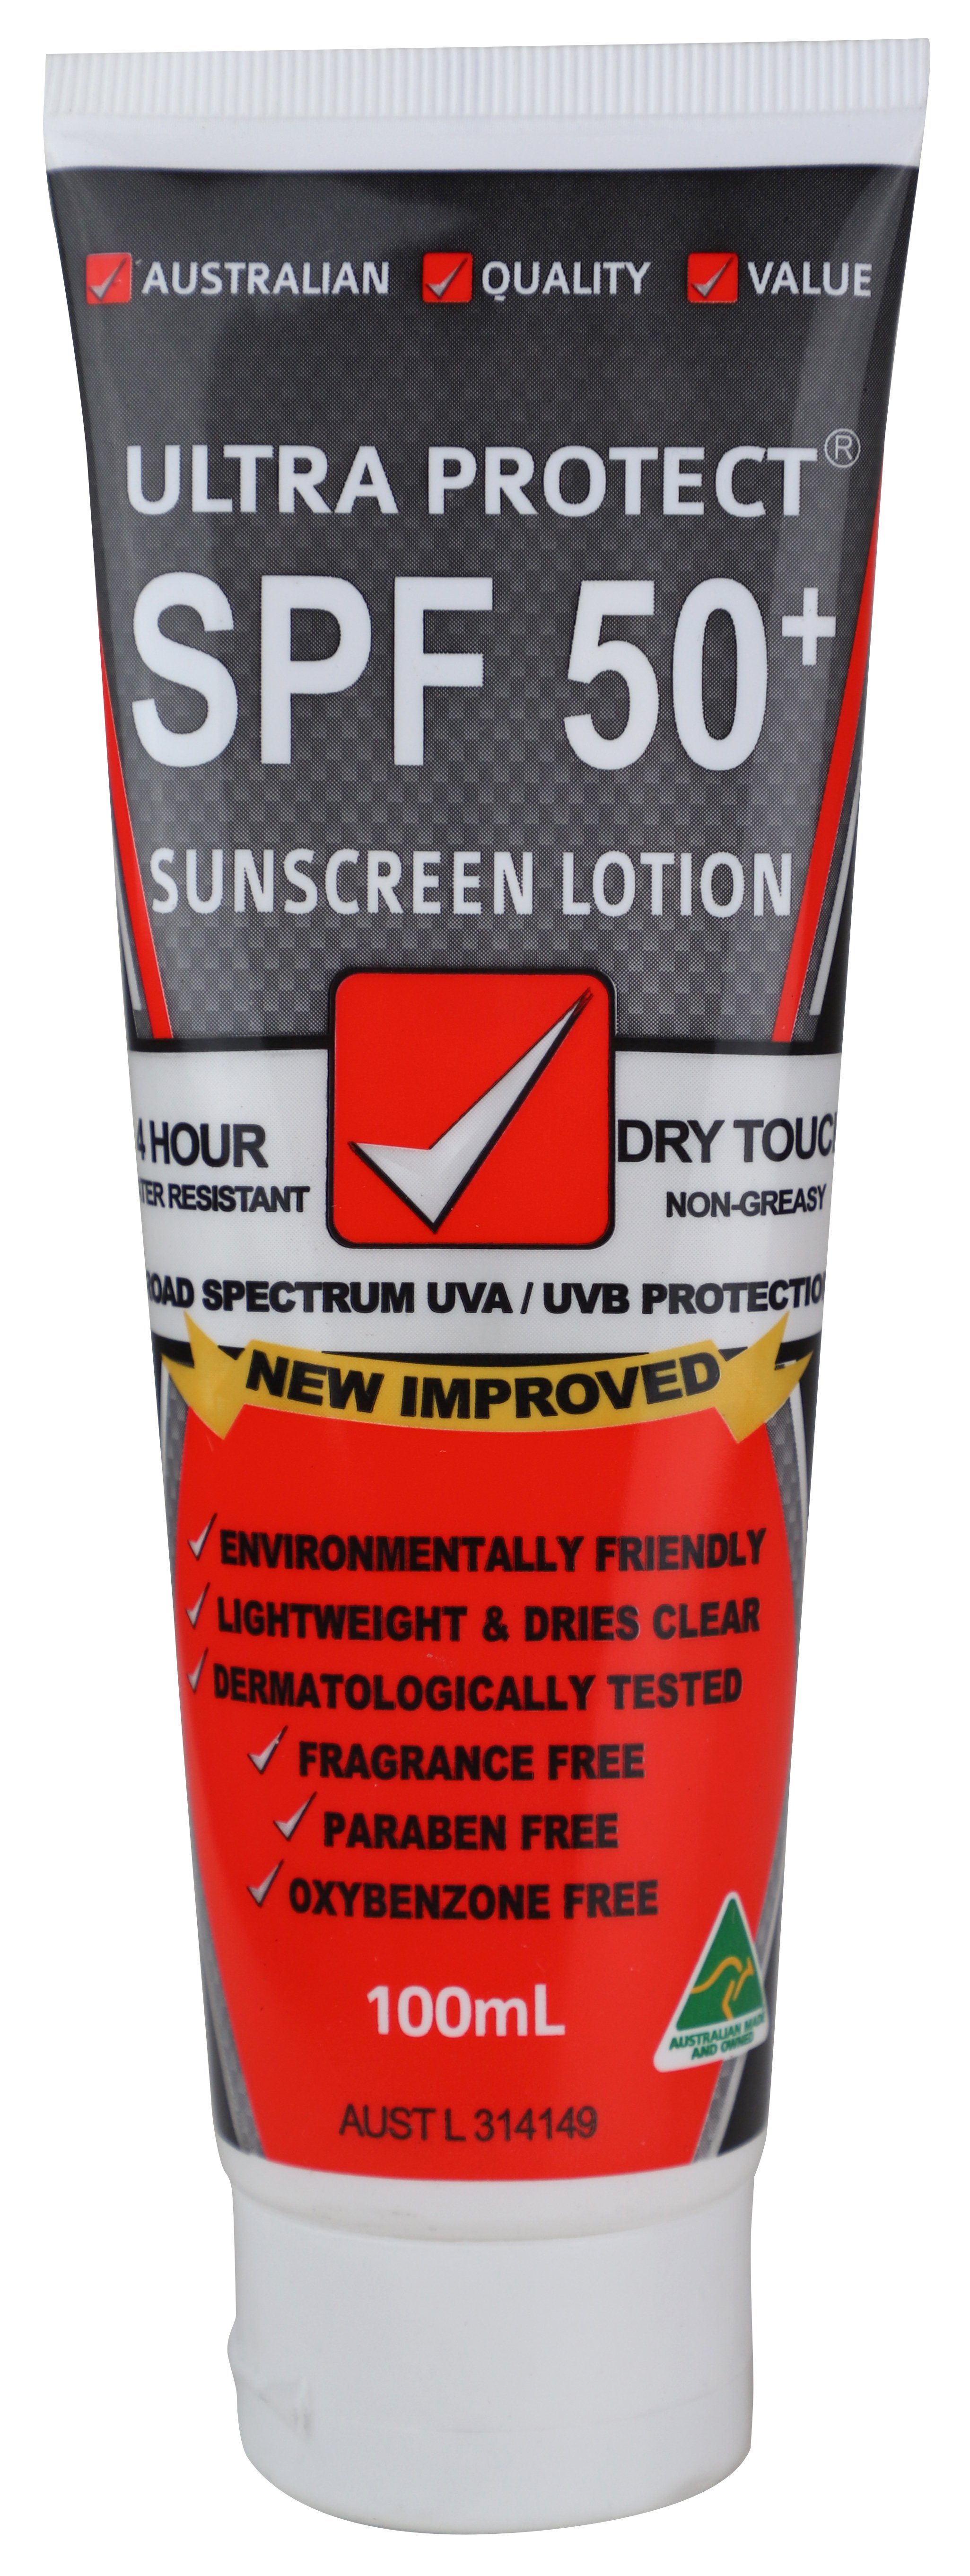 SPF 50+ Sunscreen Lotion, 100ml Tube